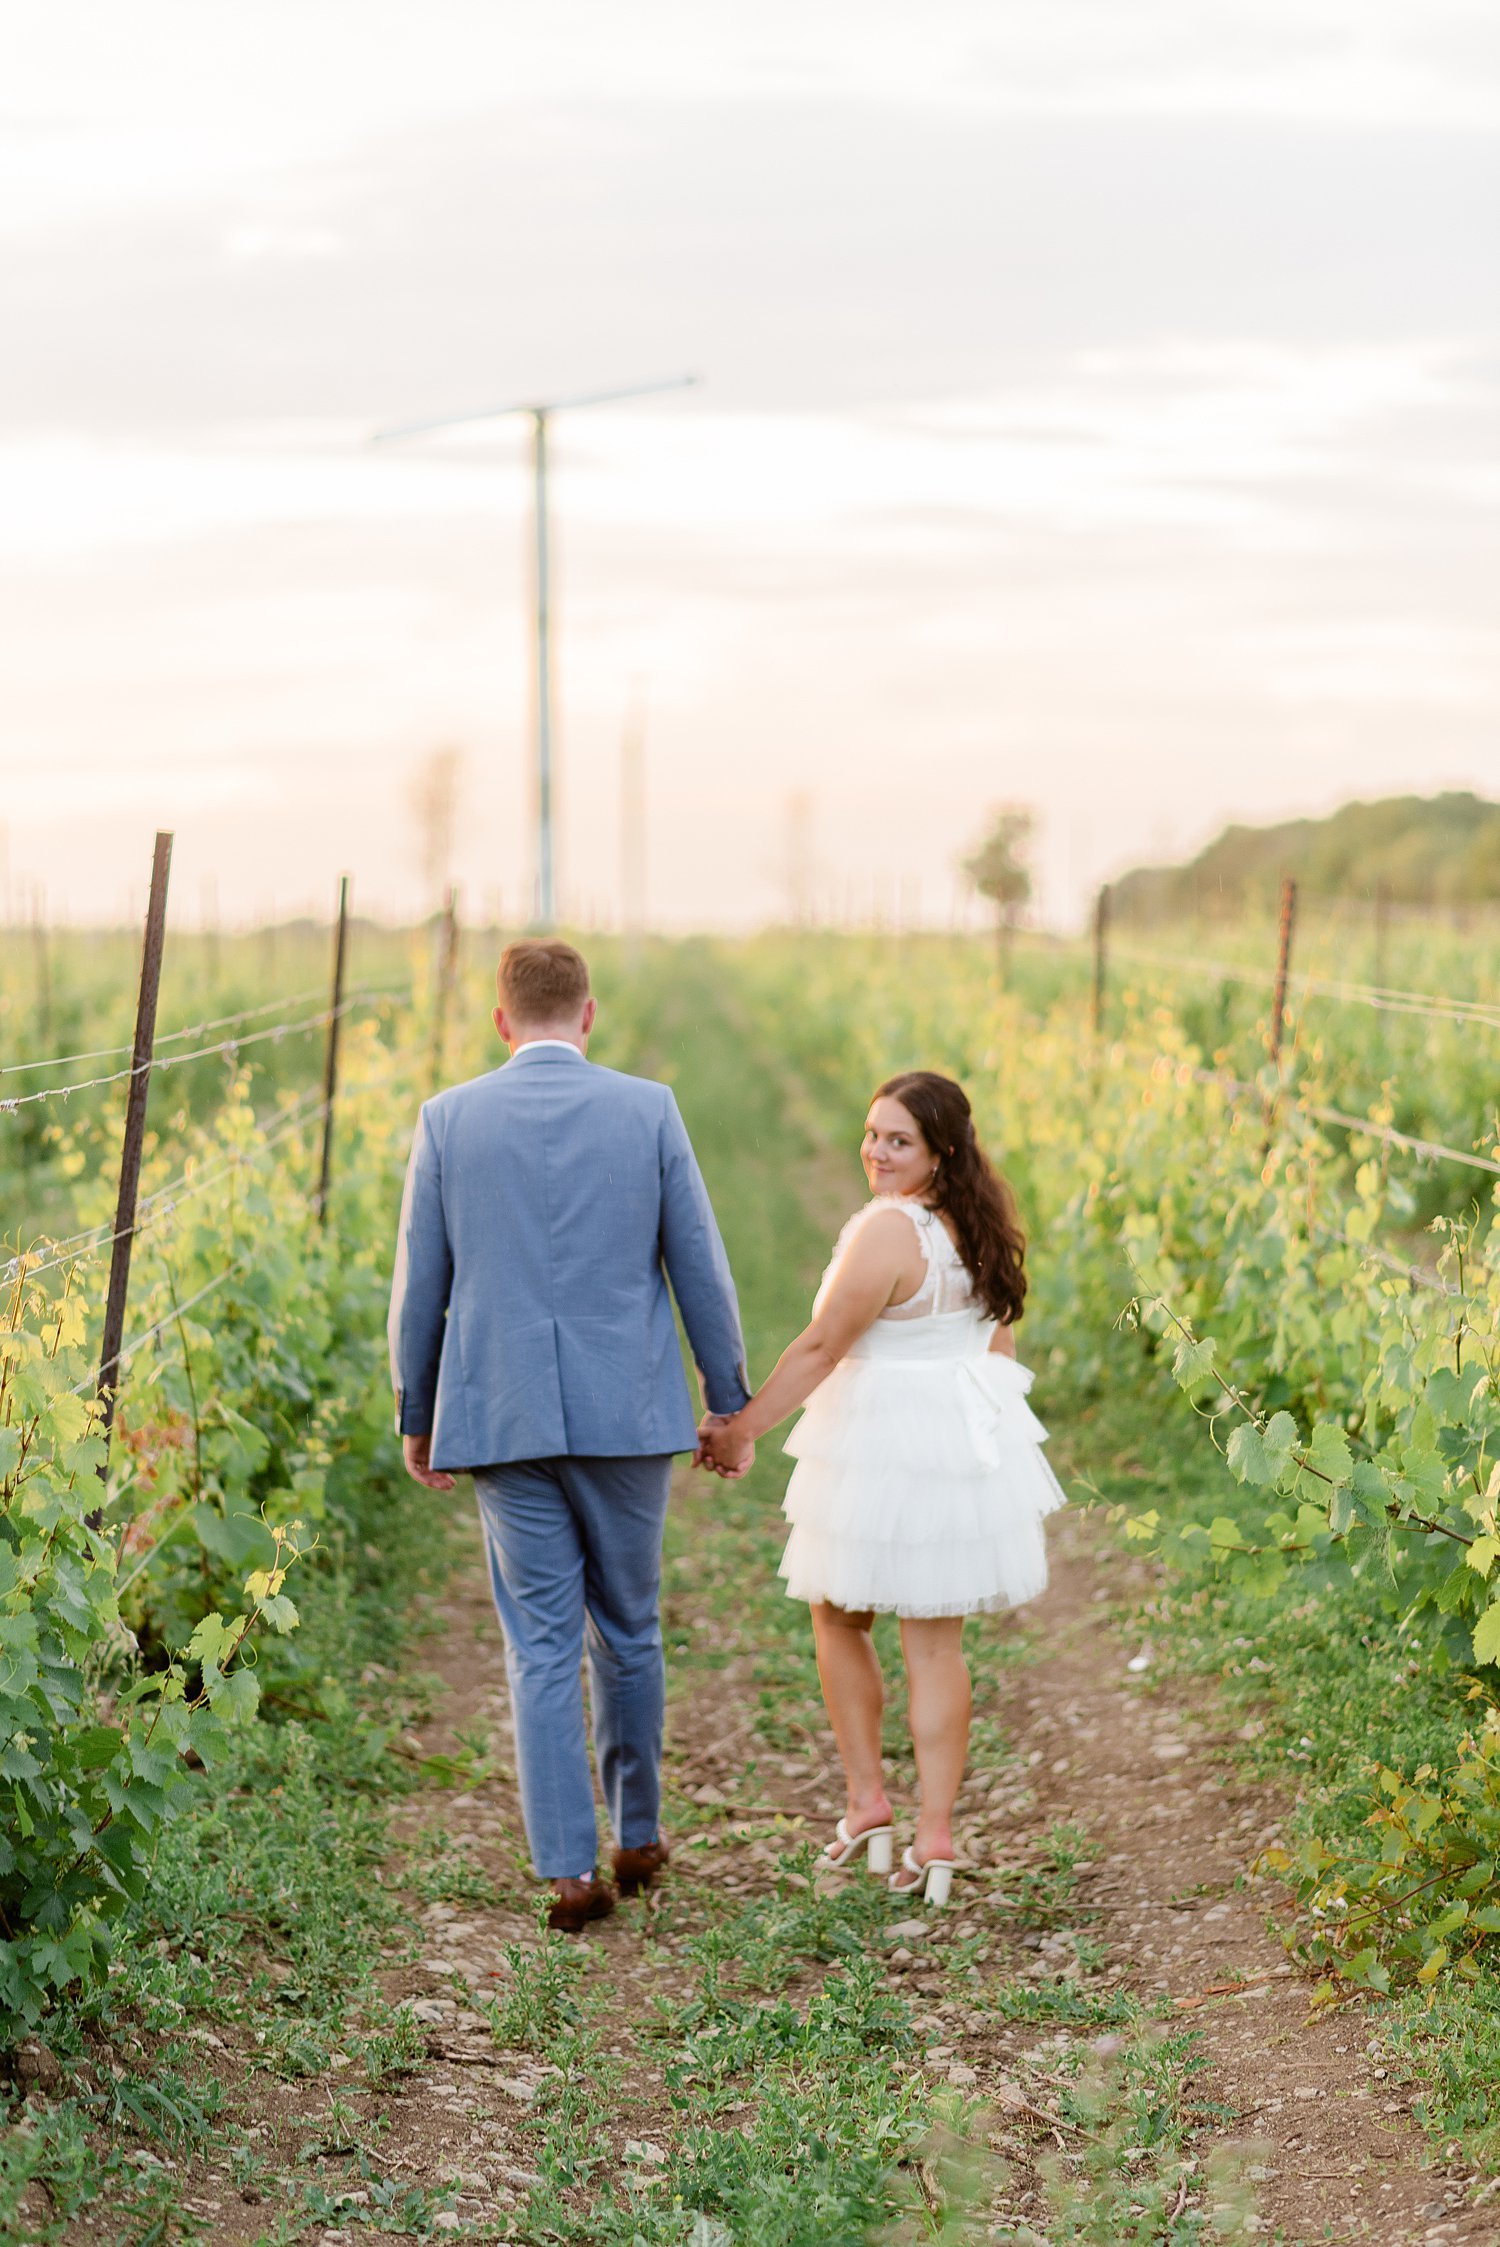 Casa Dea Winery Wedding in Prince Edward County | Prince Edward County Wedding Photographer | Holly McMurter Photographs_0121.jpg